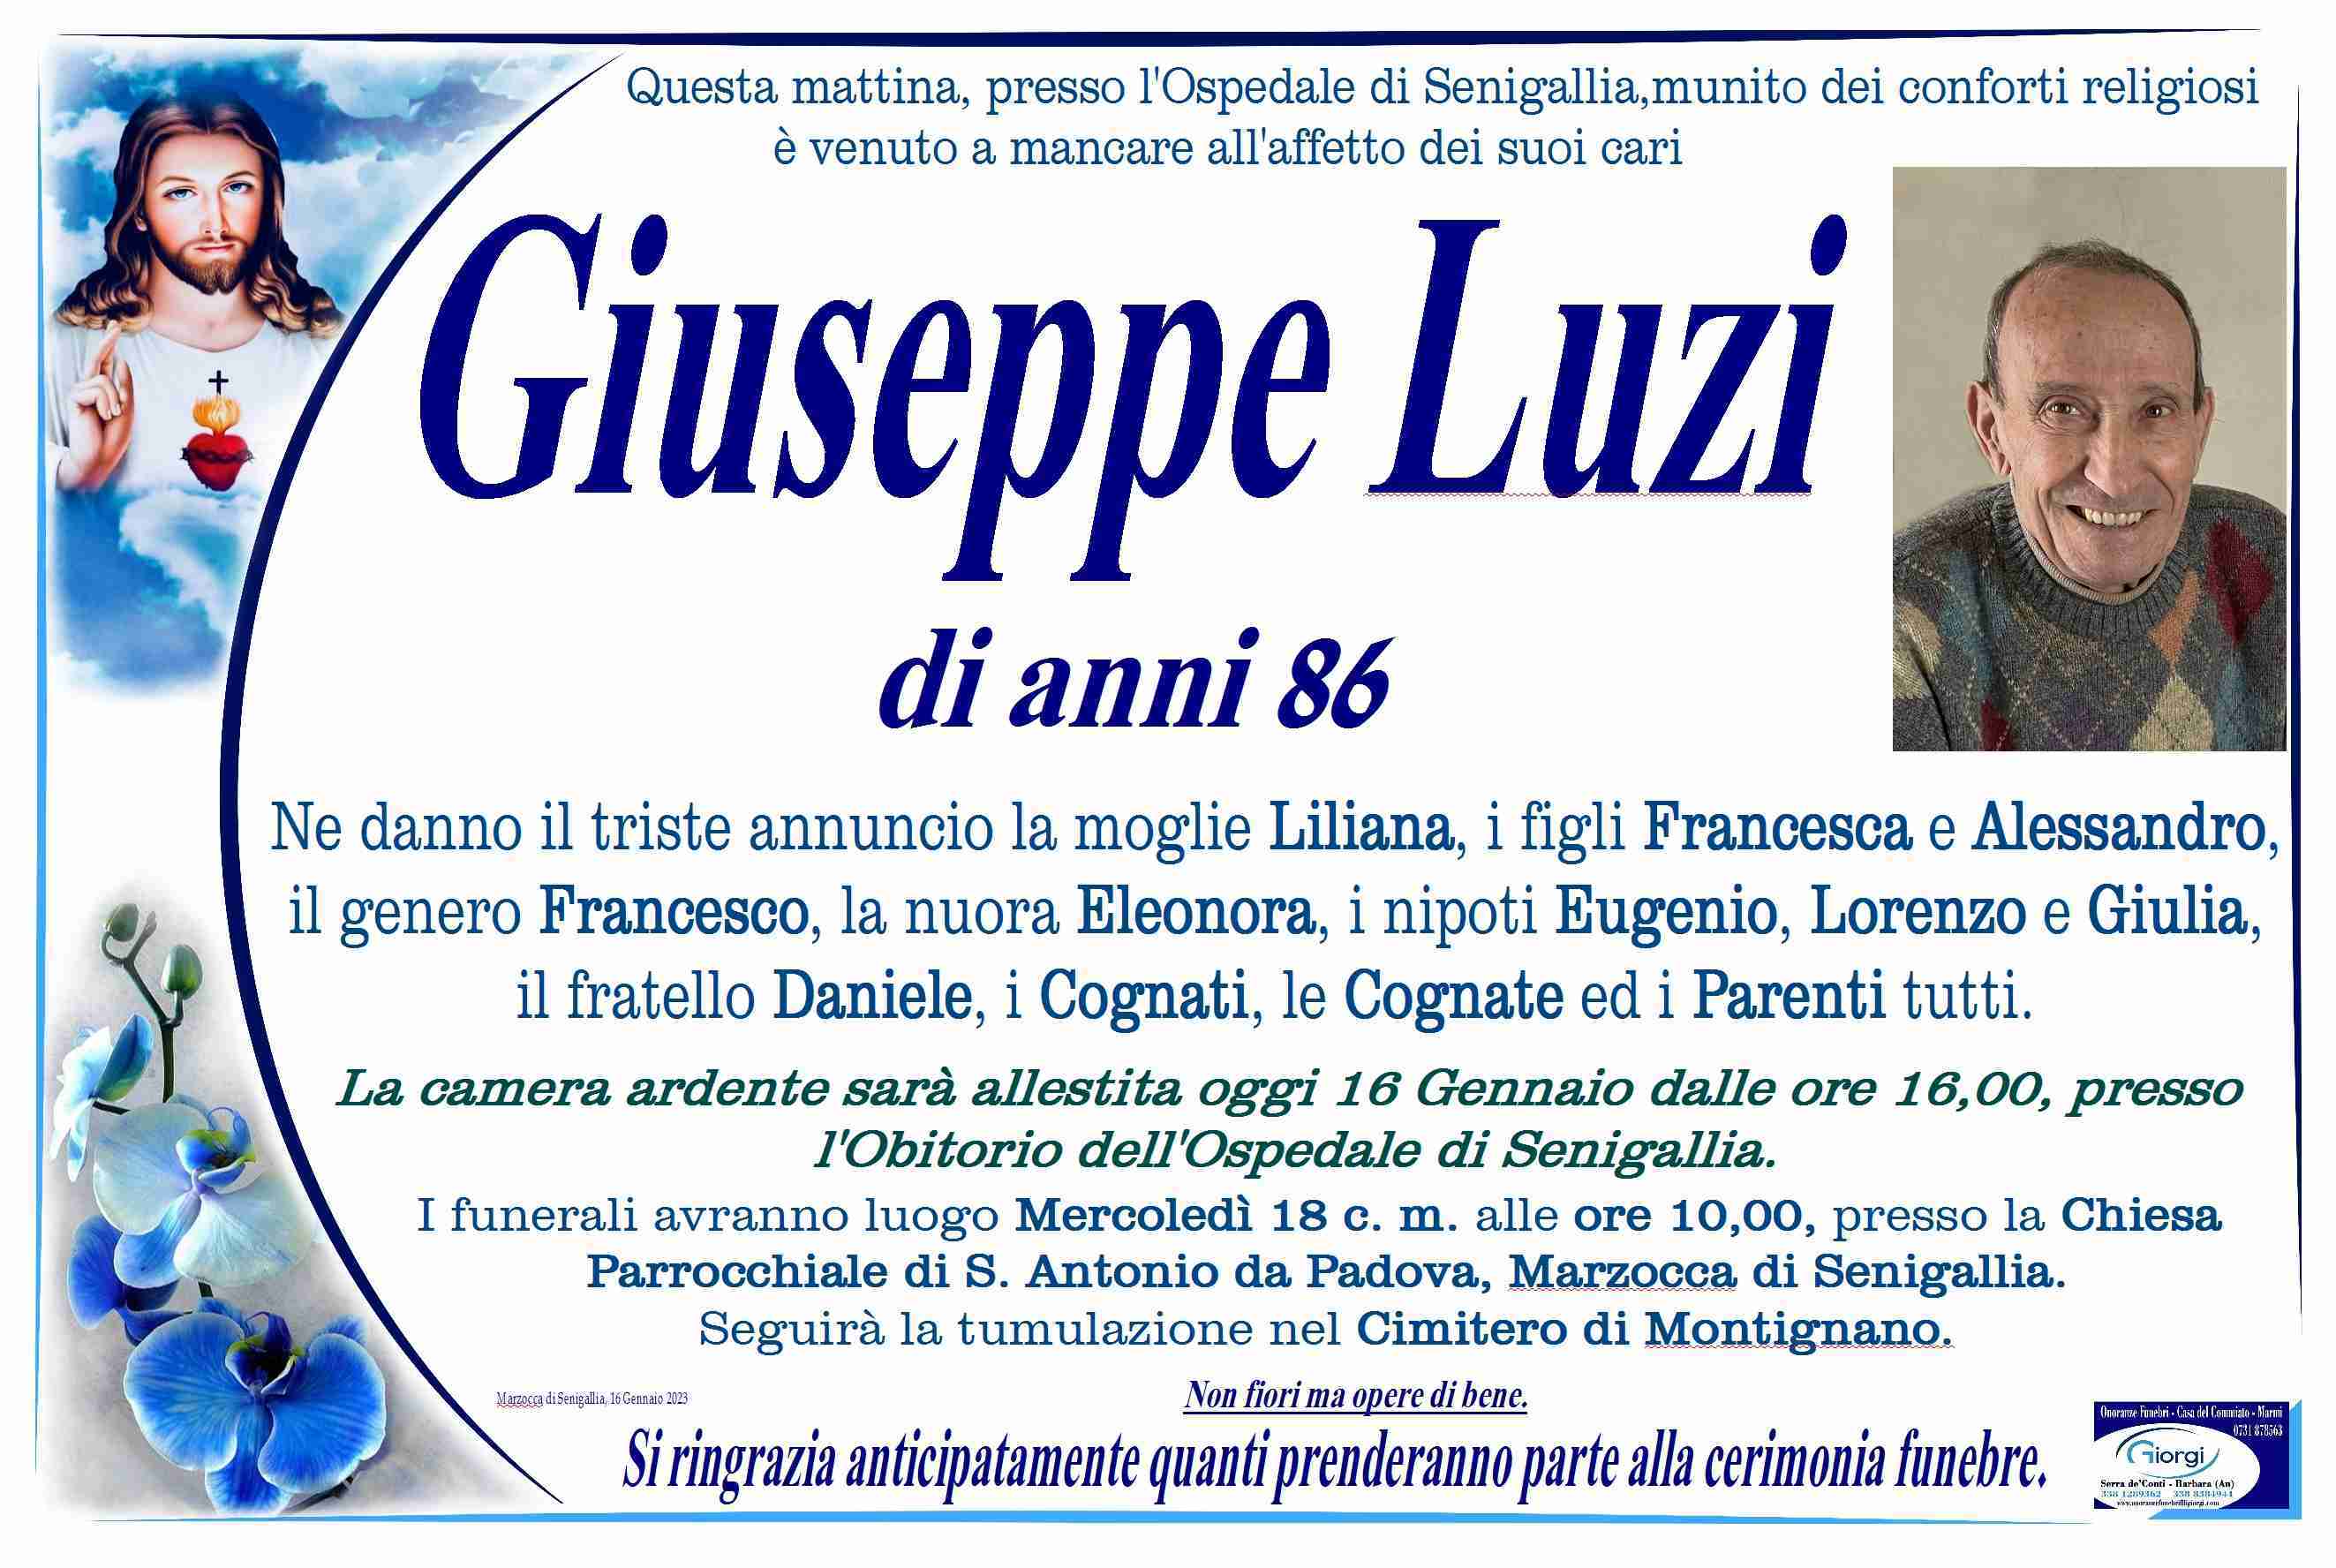 Giuseppe Luzi